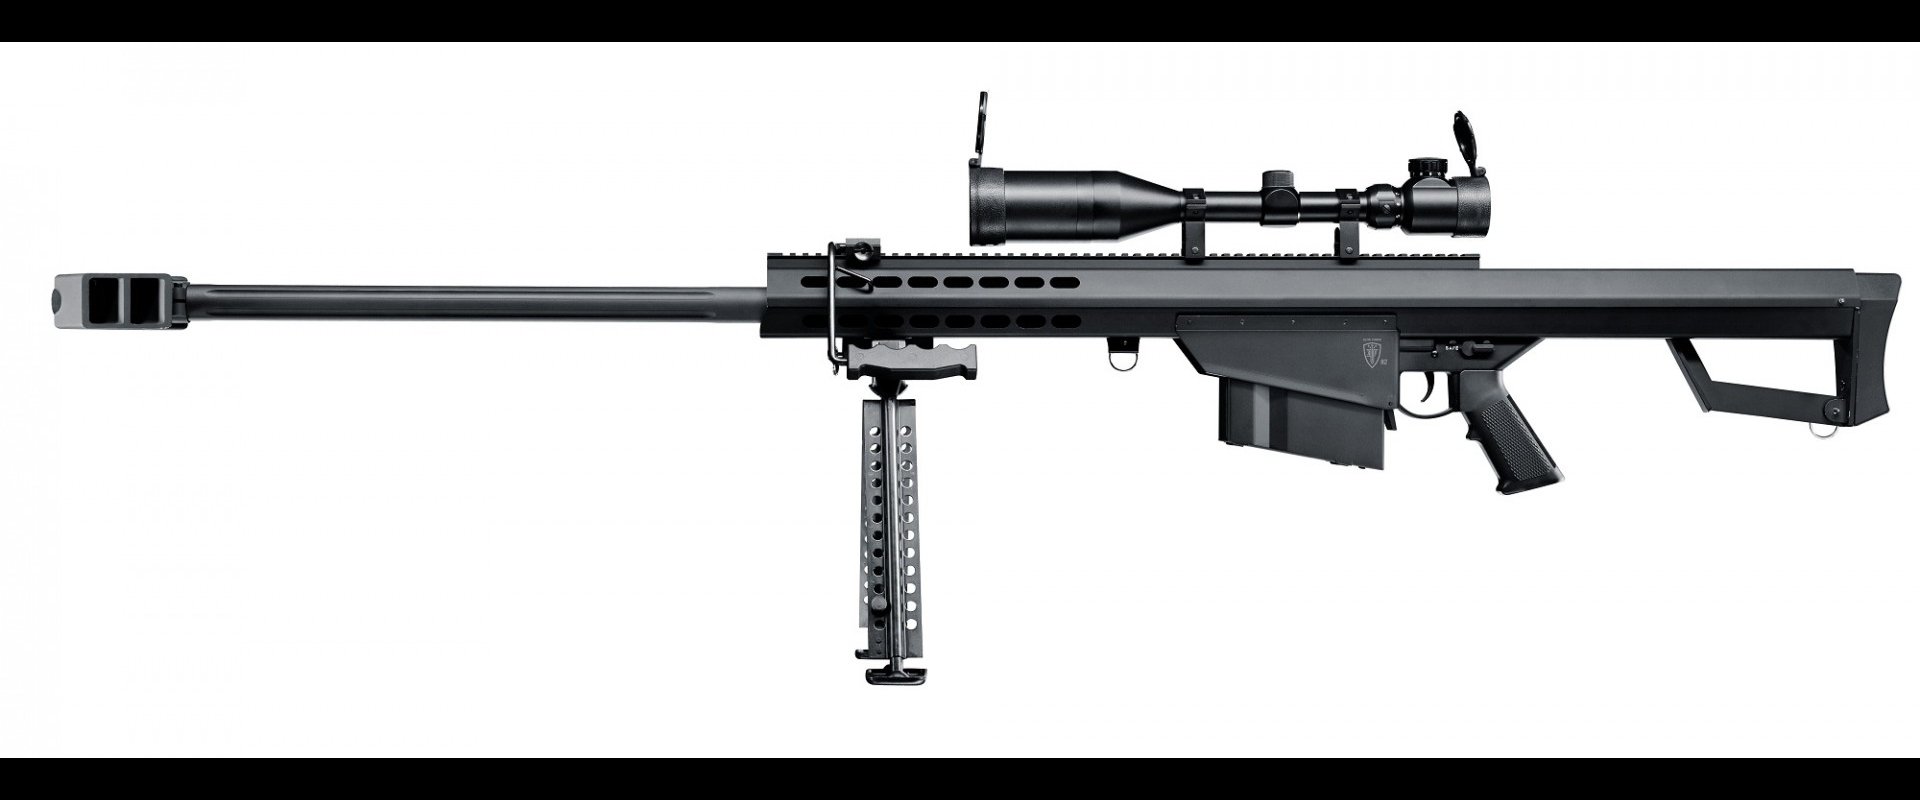 Barrett M82 Sniper Rifle Backgrounds, Compatible - PC, Mobile, Gadgets| 1920x800 px